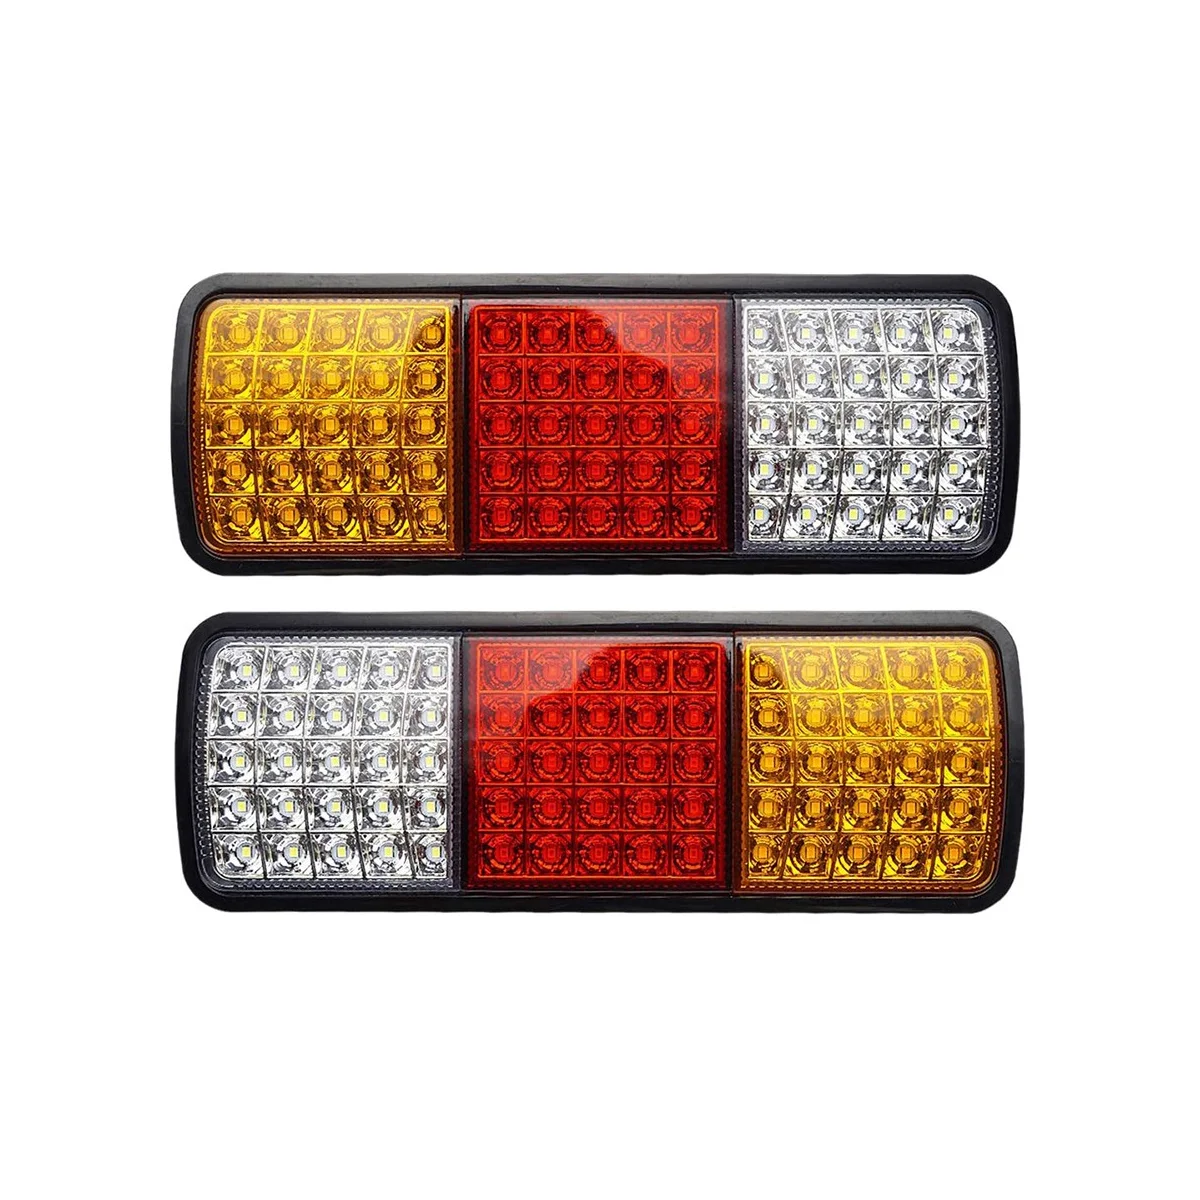 

2Pcs 12V 75 LED Waterproof Taillights for Truck RV Van Bus Trailer Lights Signal Indicator Brake Stop Reverse Lights